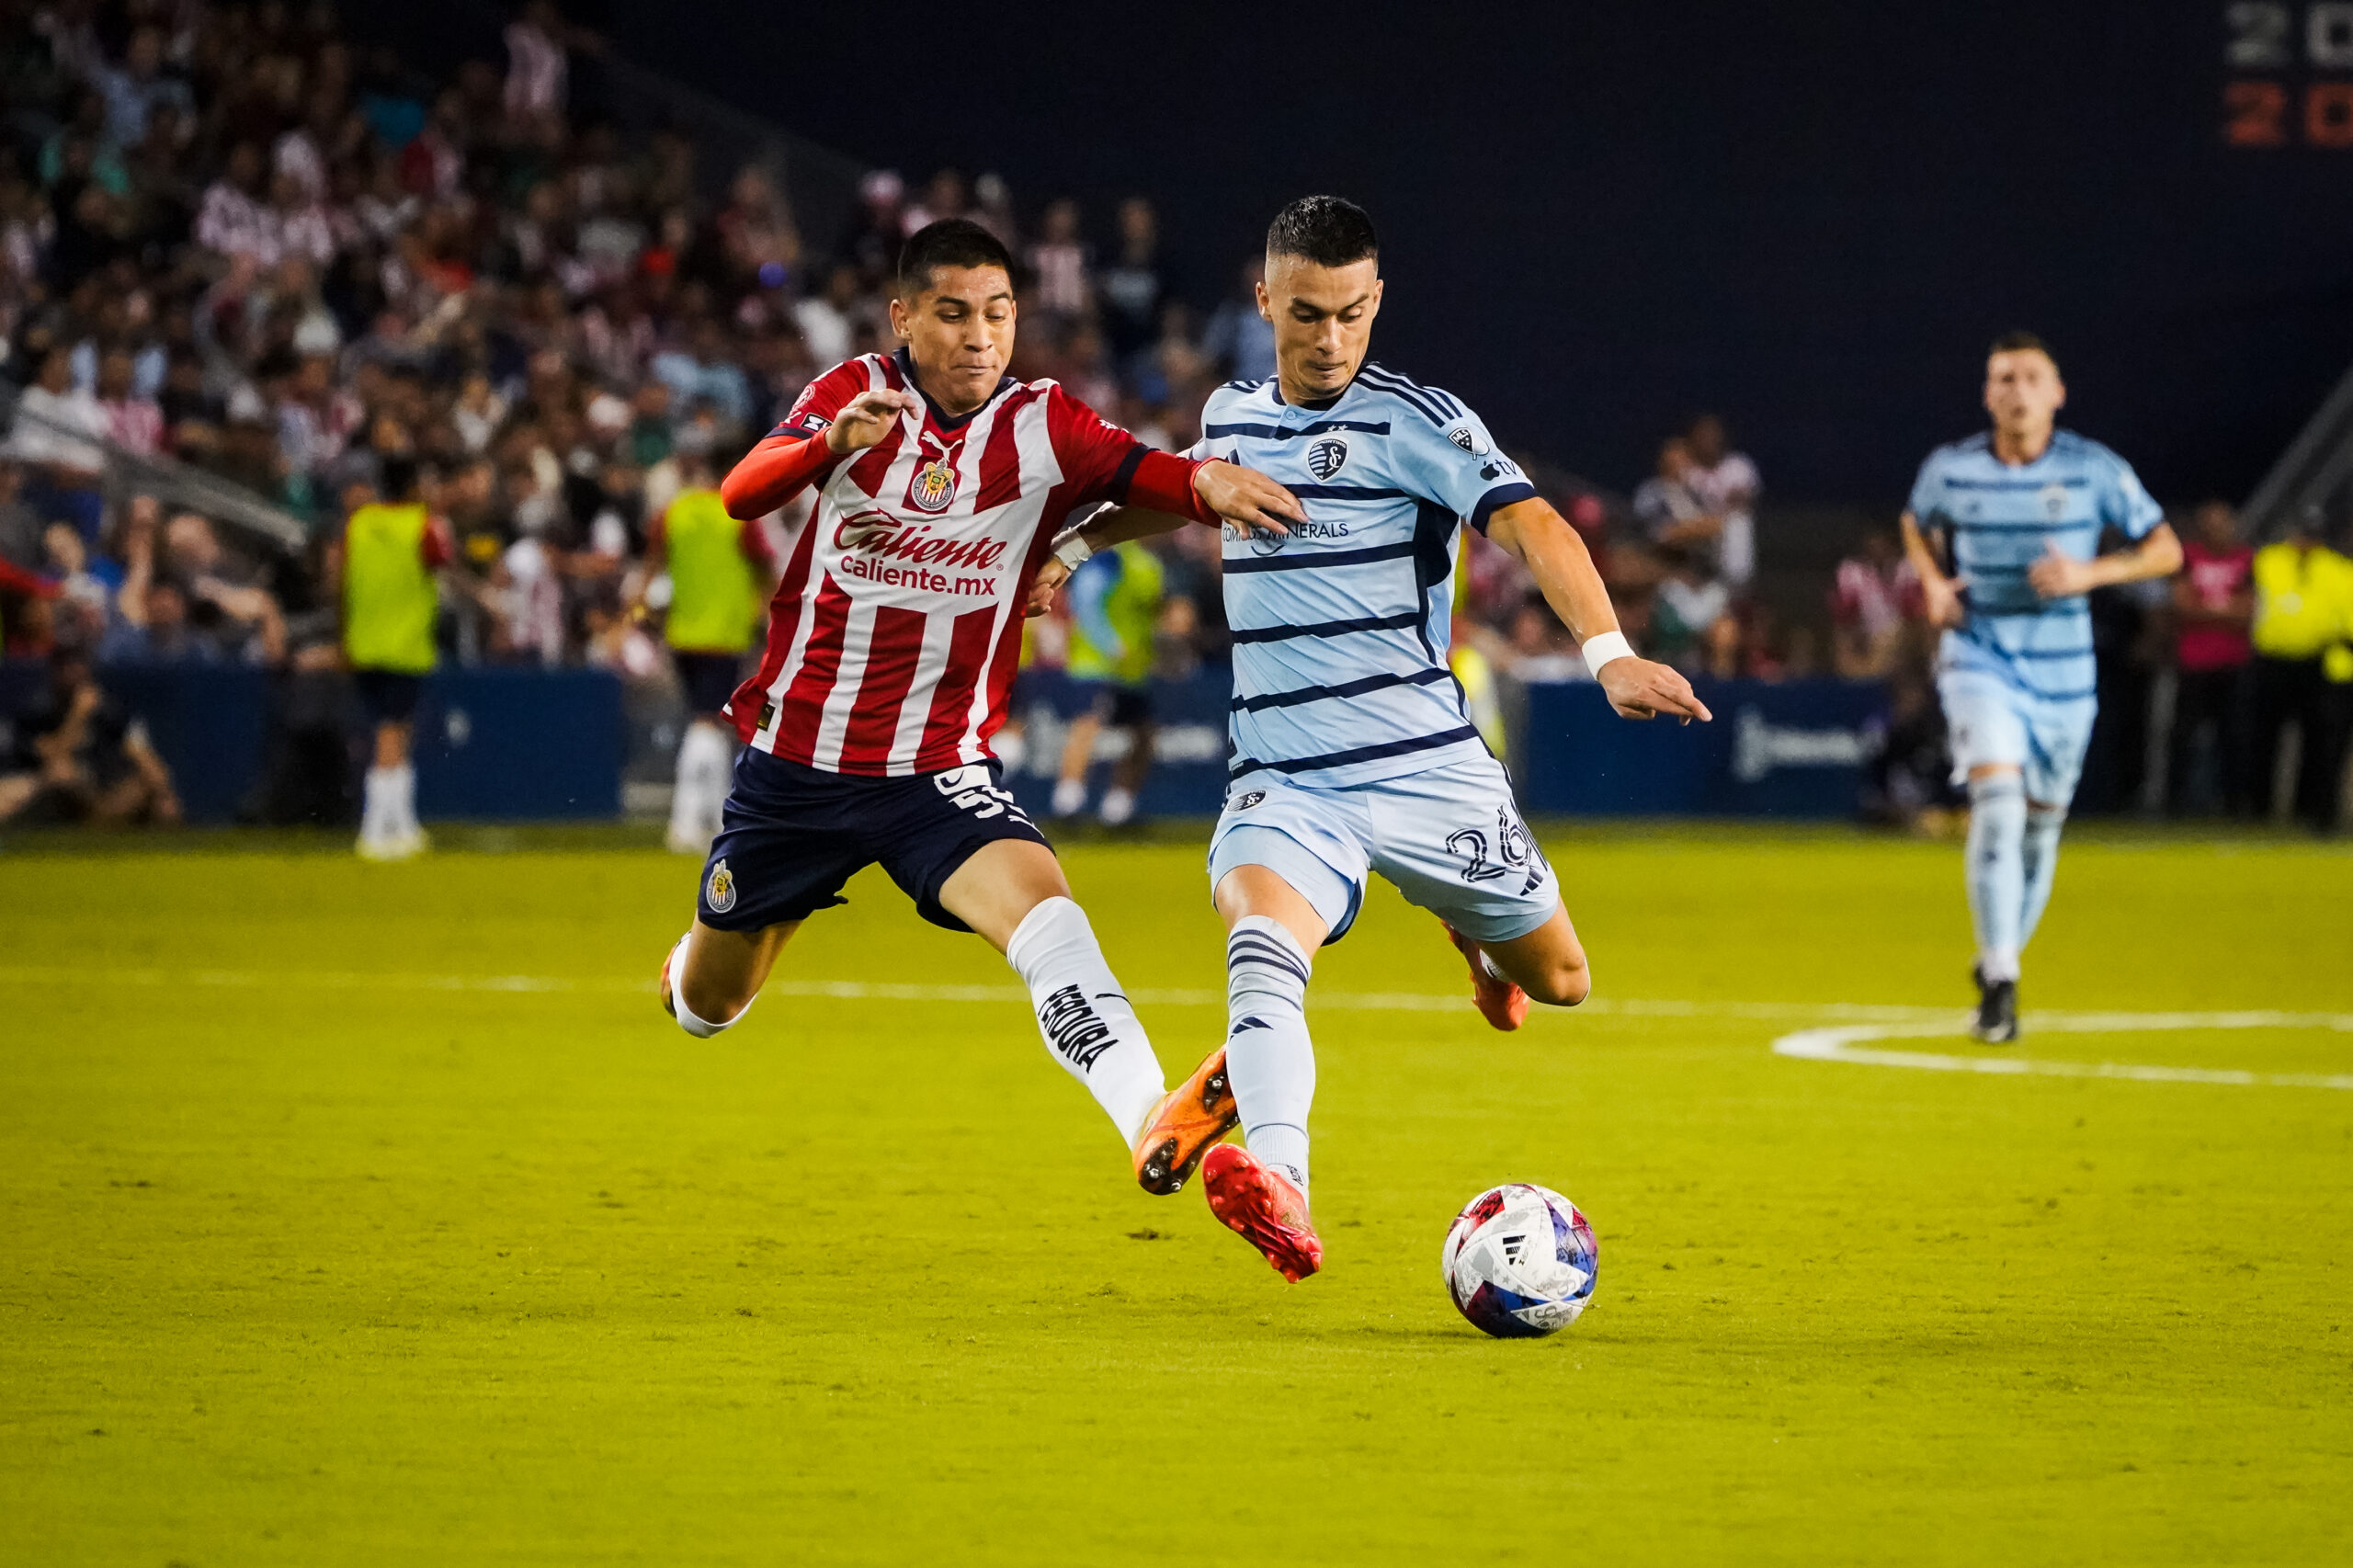 Nashville Soccer Club Falls to Liga MX's Toluca in Final Group